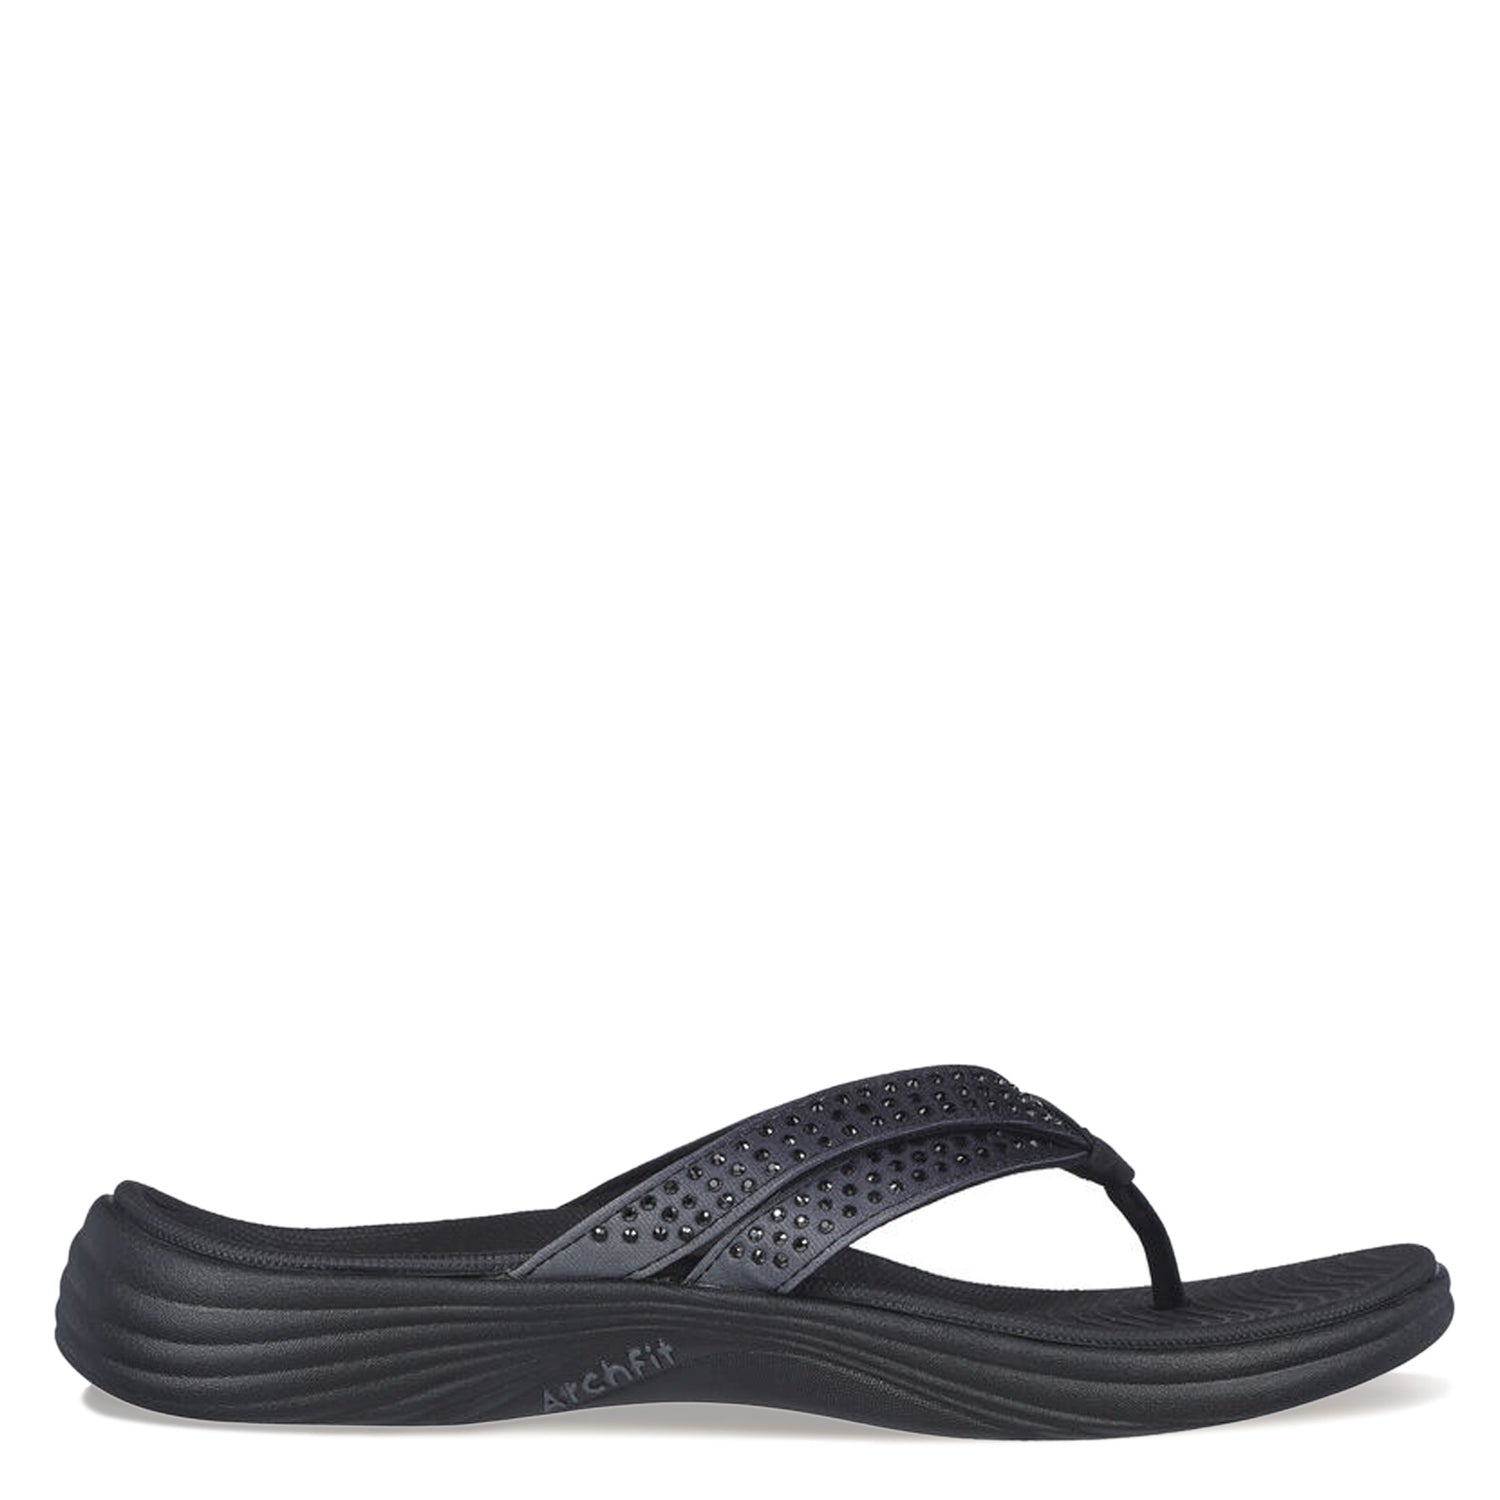 Peltz Shoes  Women's Skechers Arch Fit Radiance - Mesmerize Sandal BLACK 141305-BKGY